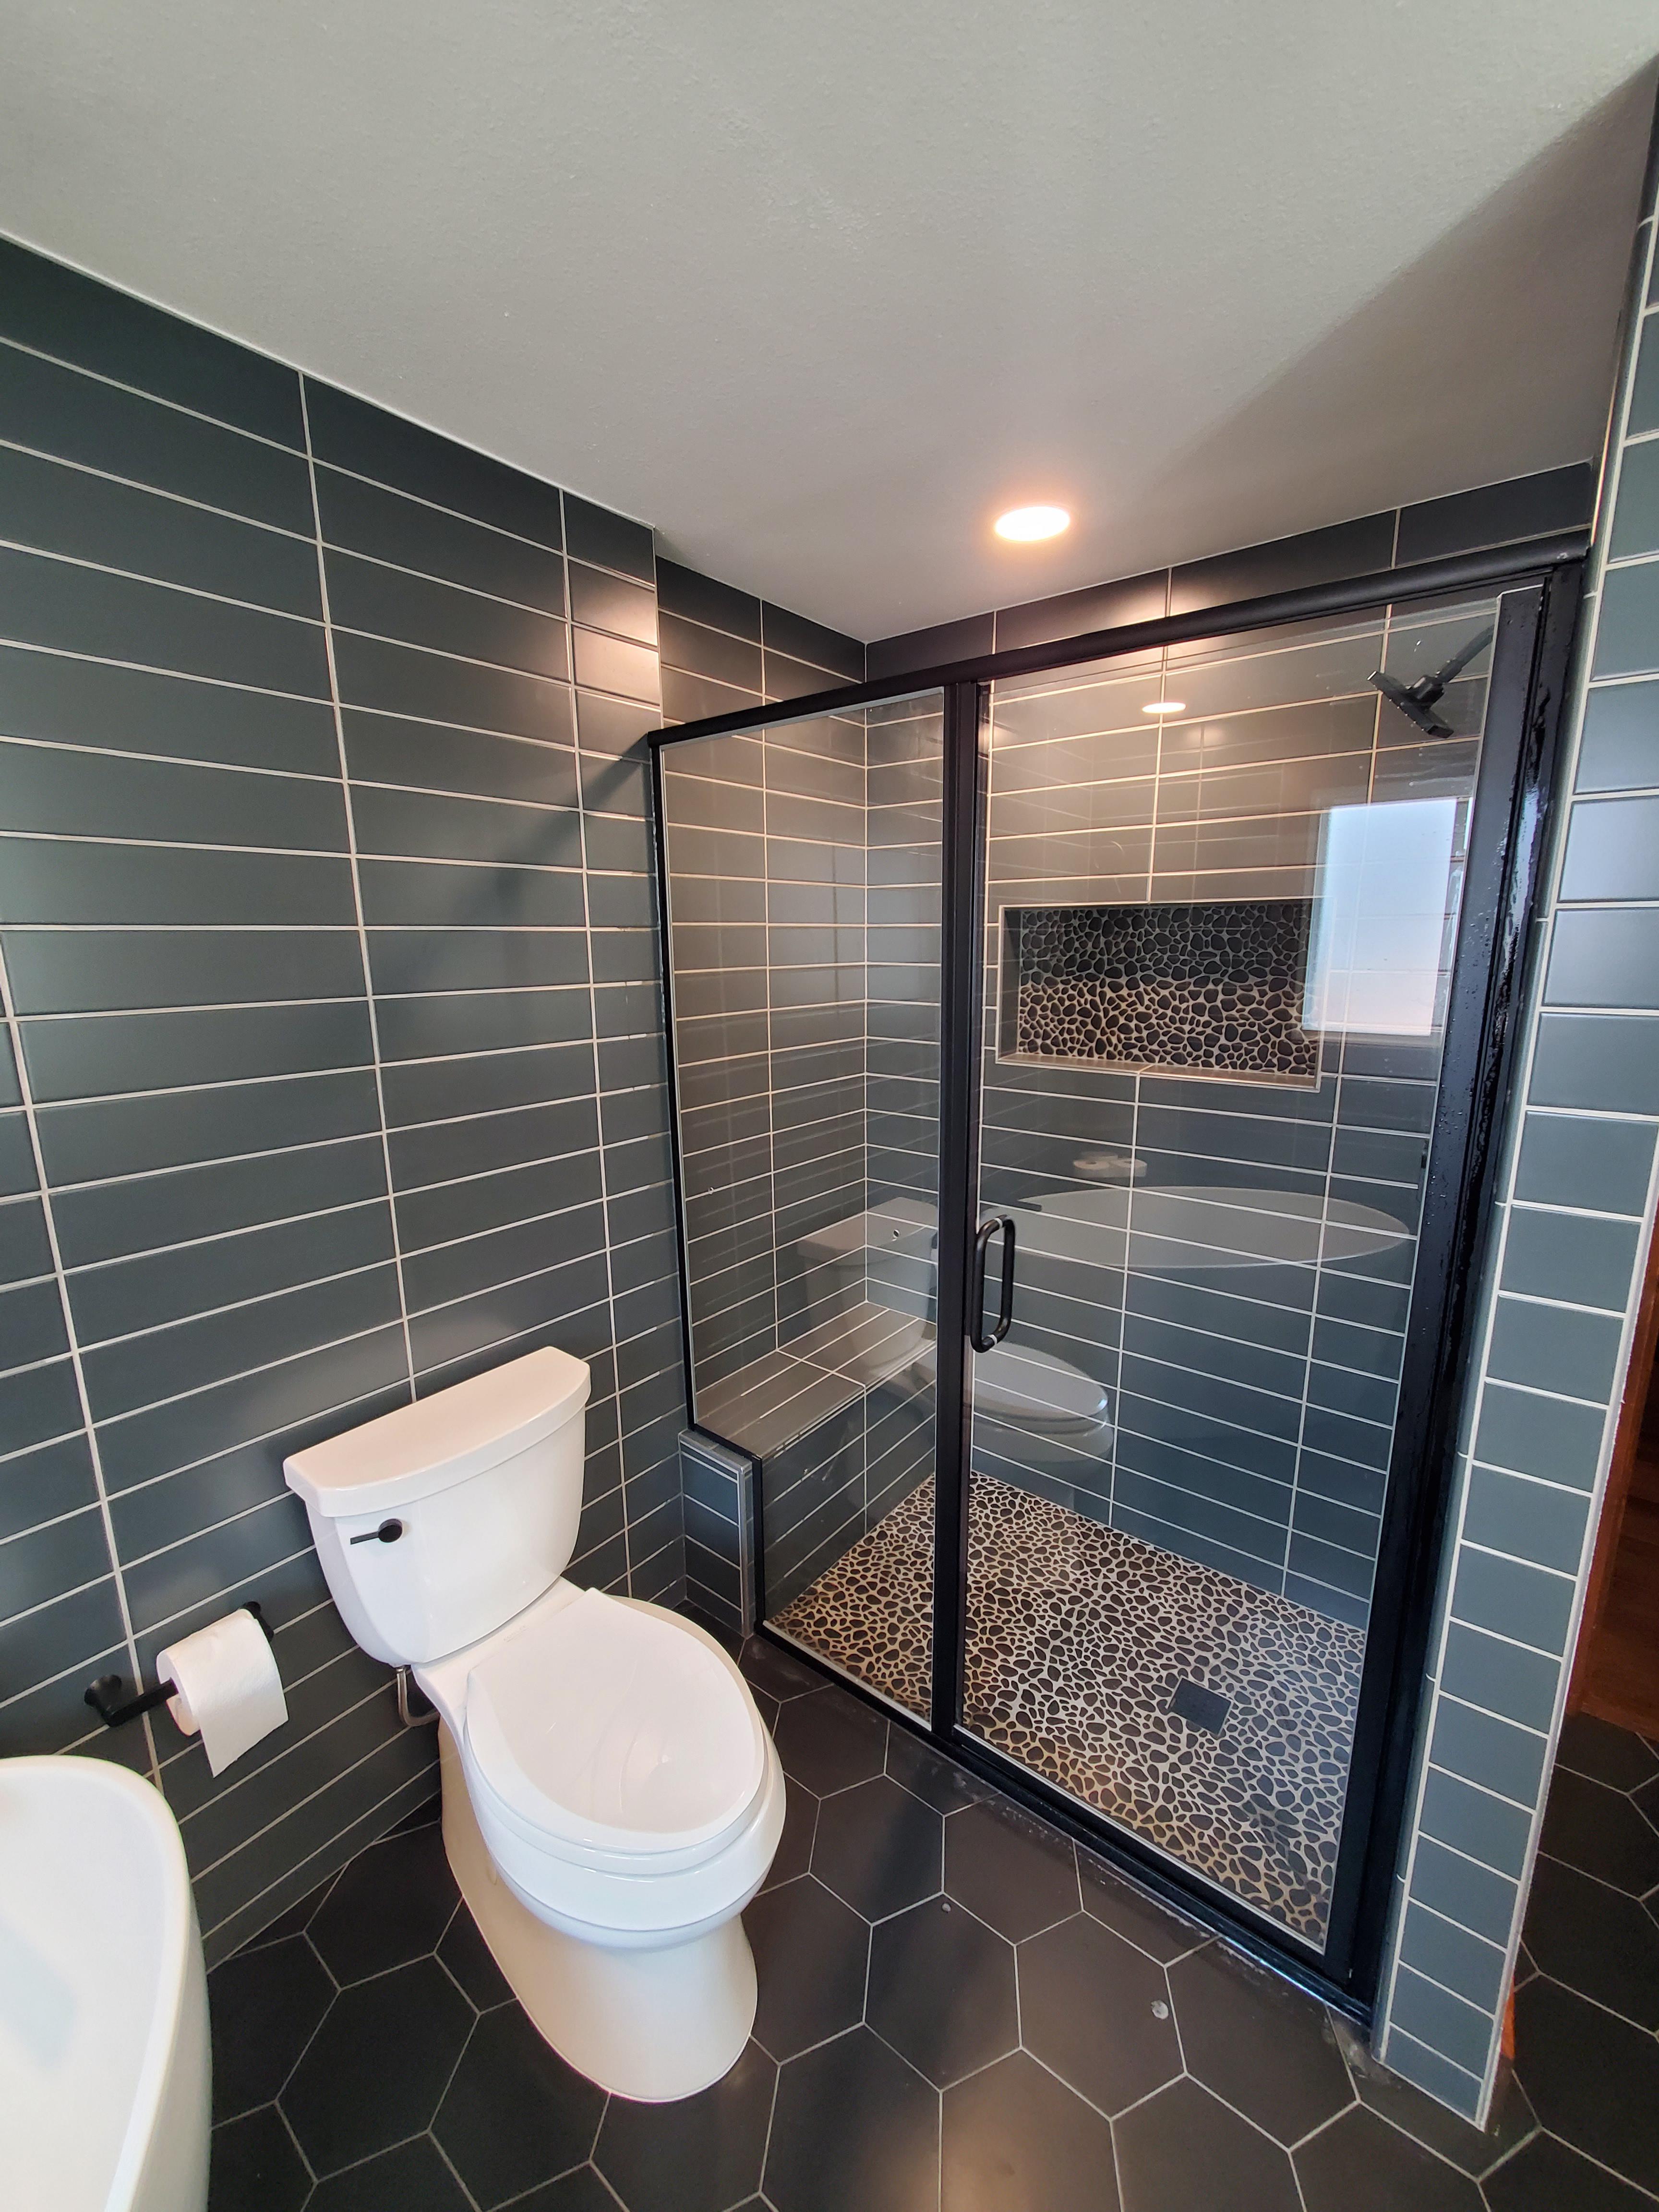 Shower Doors Installed! DreamMaker Bath & Kitchen of Larimer County Fort Collins (970)616-0900